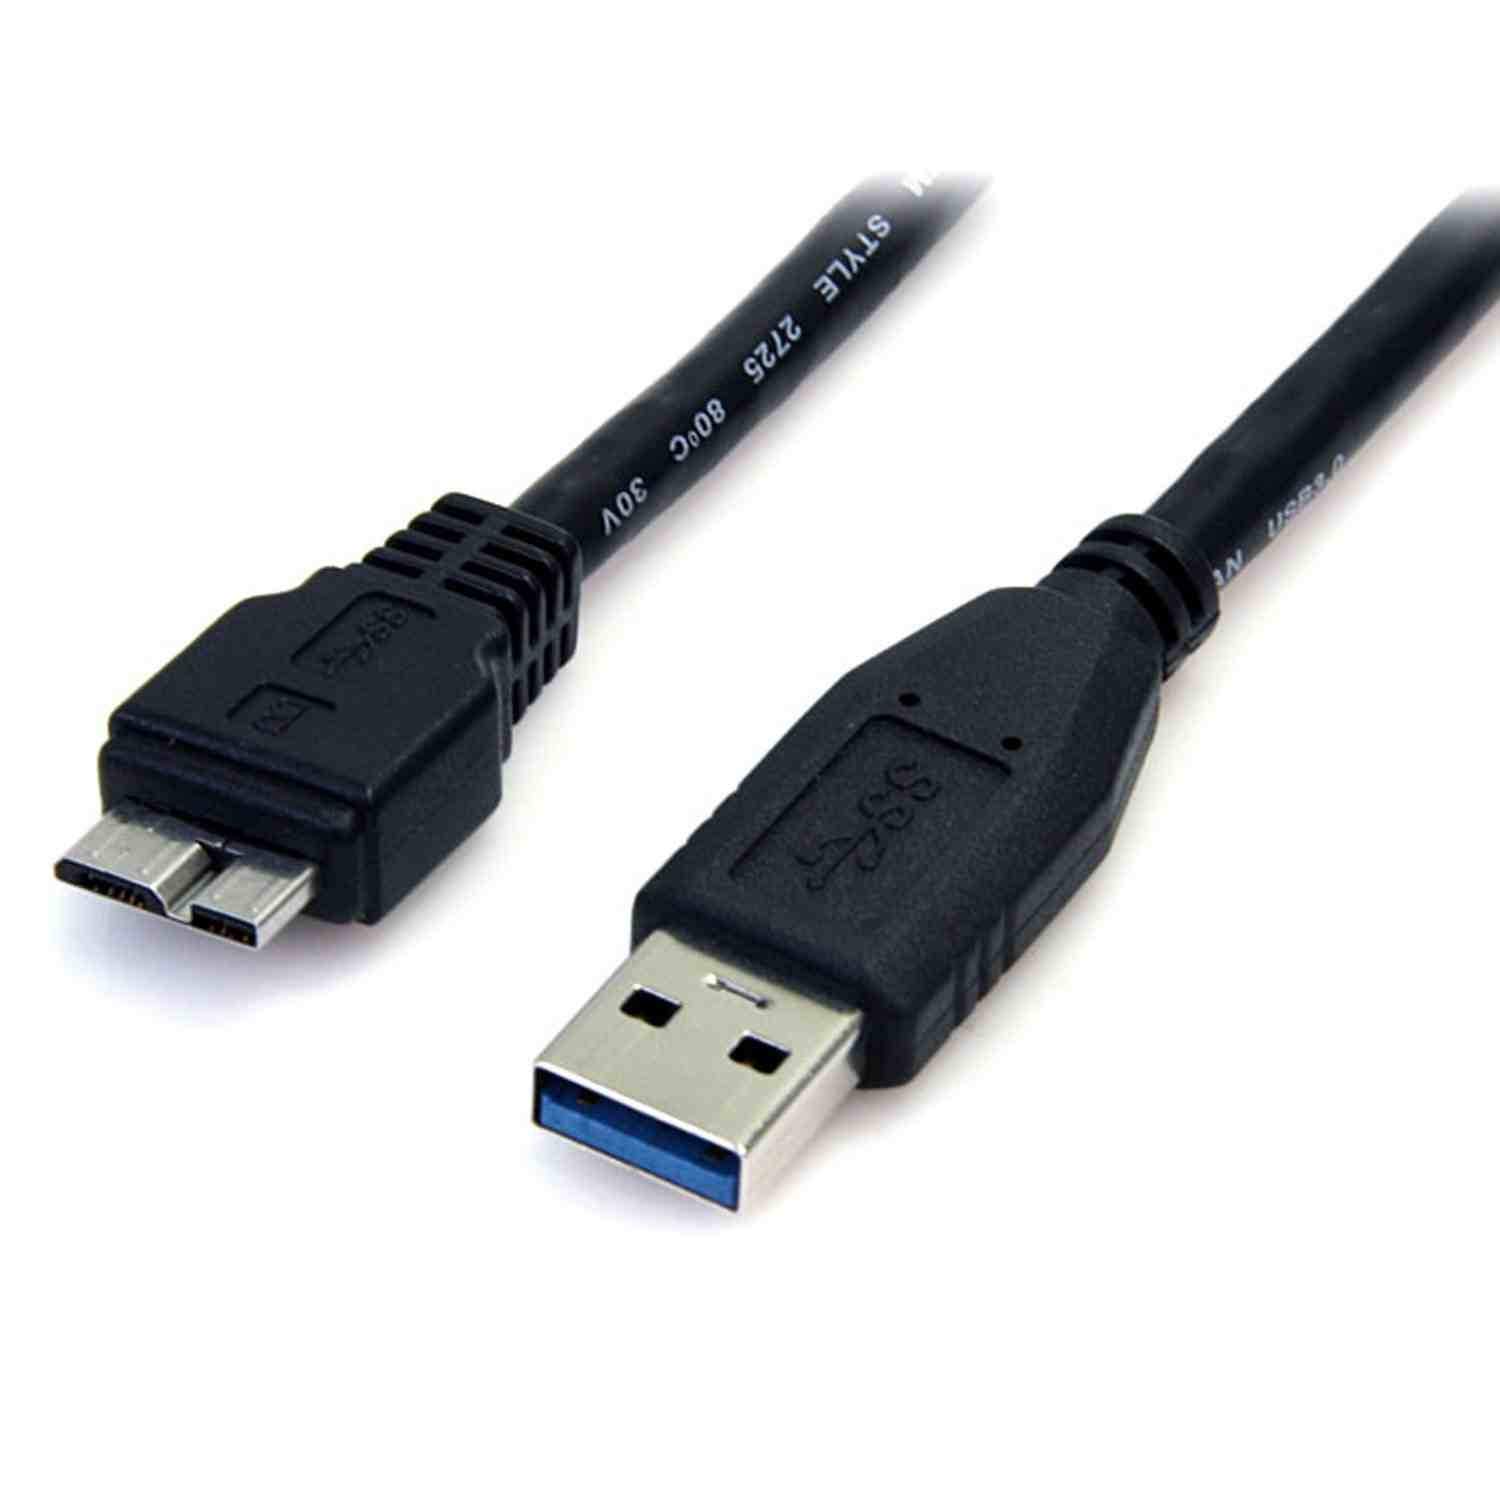 USB cable for Panasonic LUMIX DMC-LX10